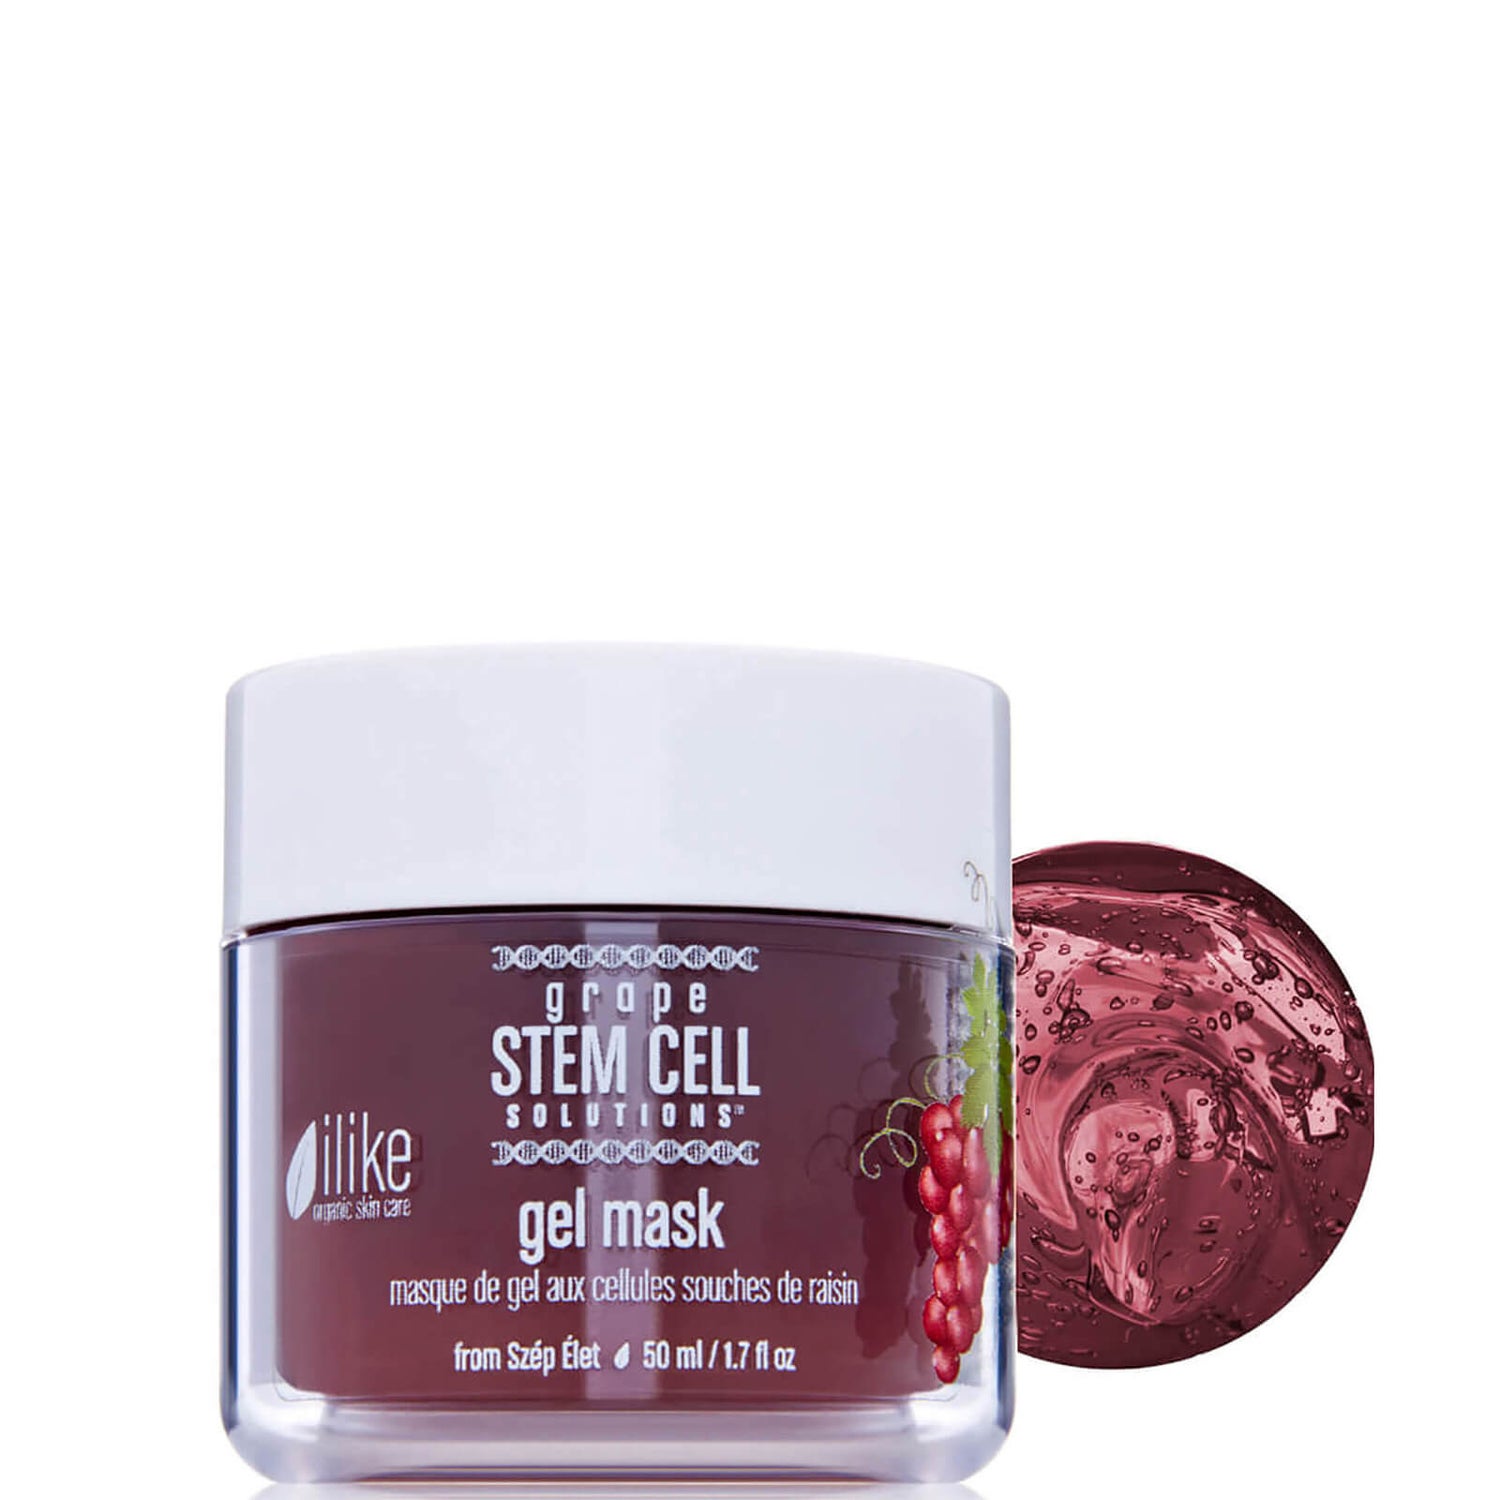 ilike organic skin care Grape Stem Cell Solutions Gel Mask (1.7 fl. oz.)